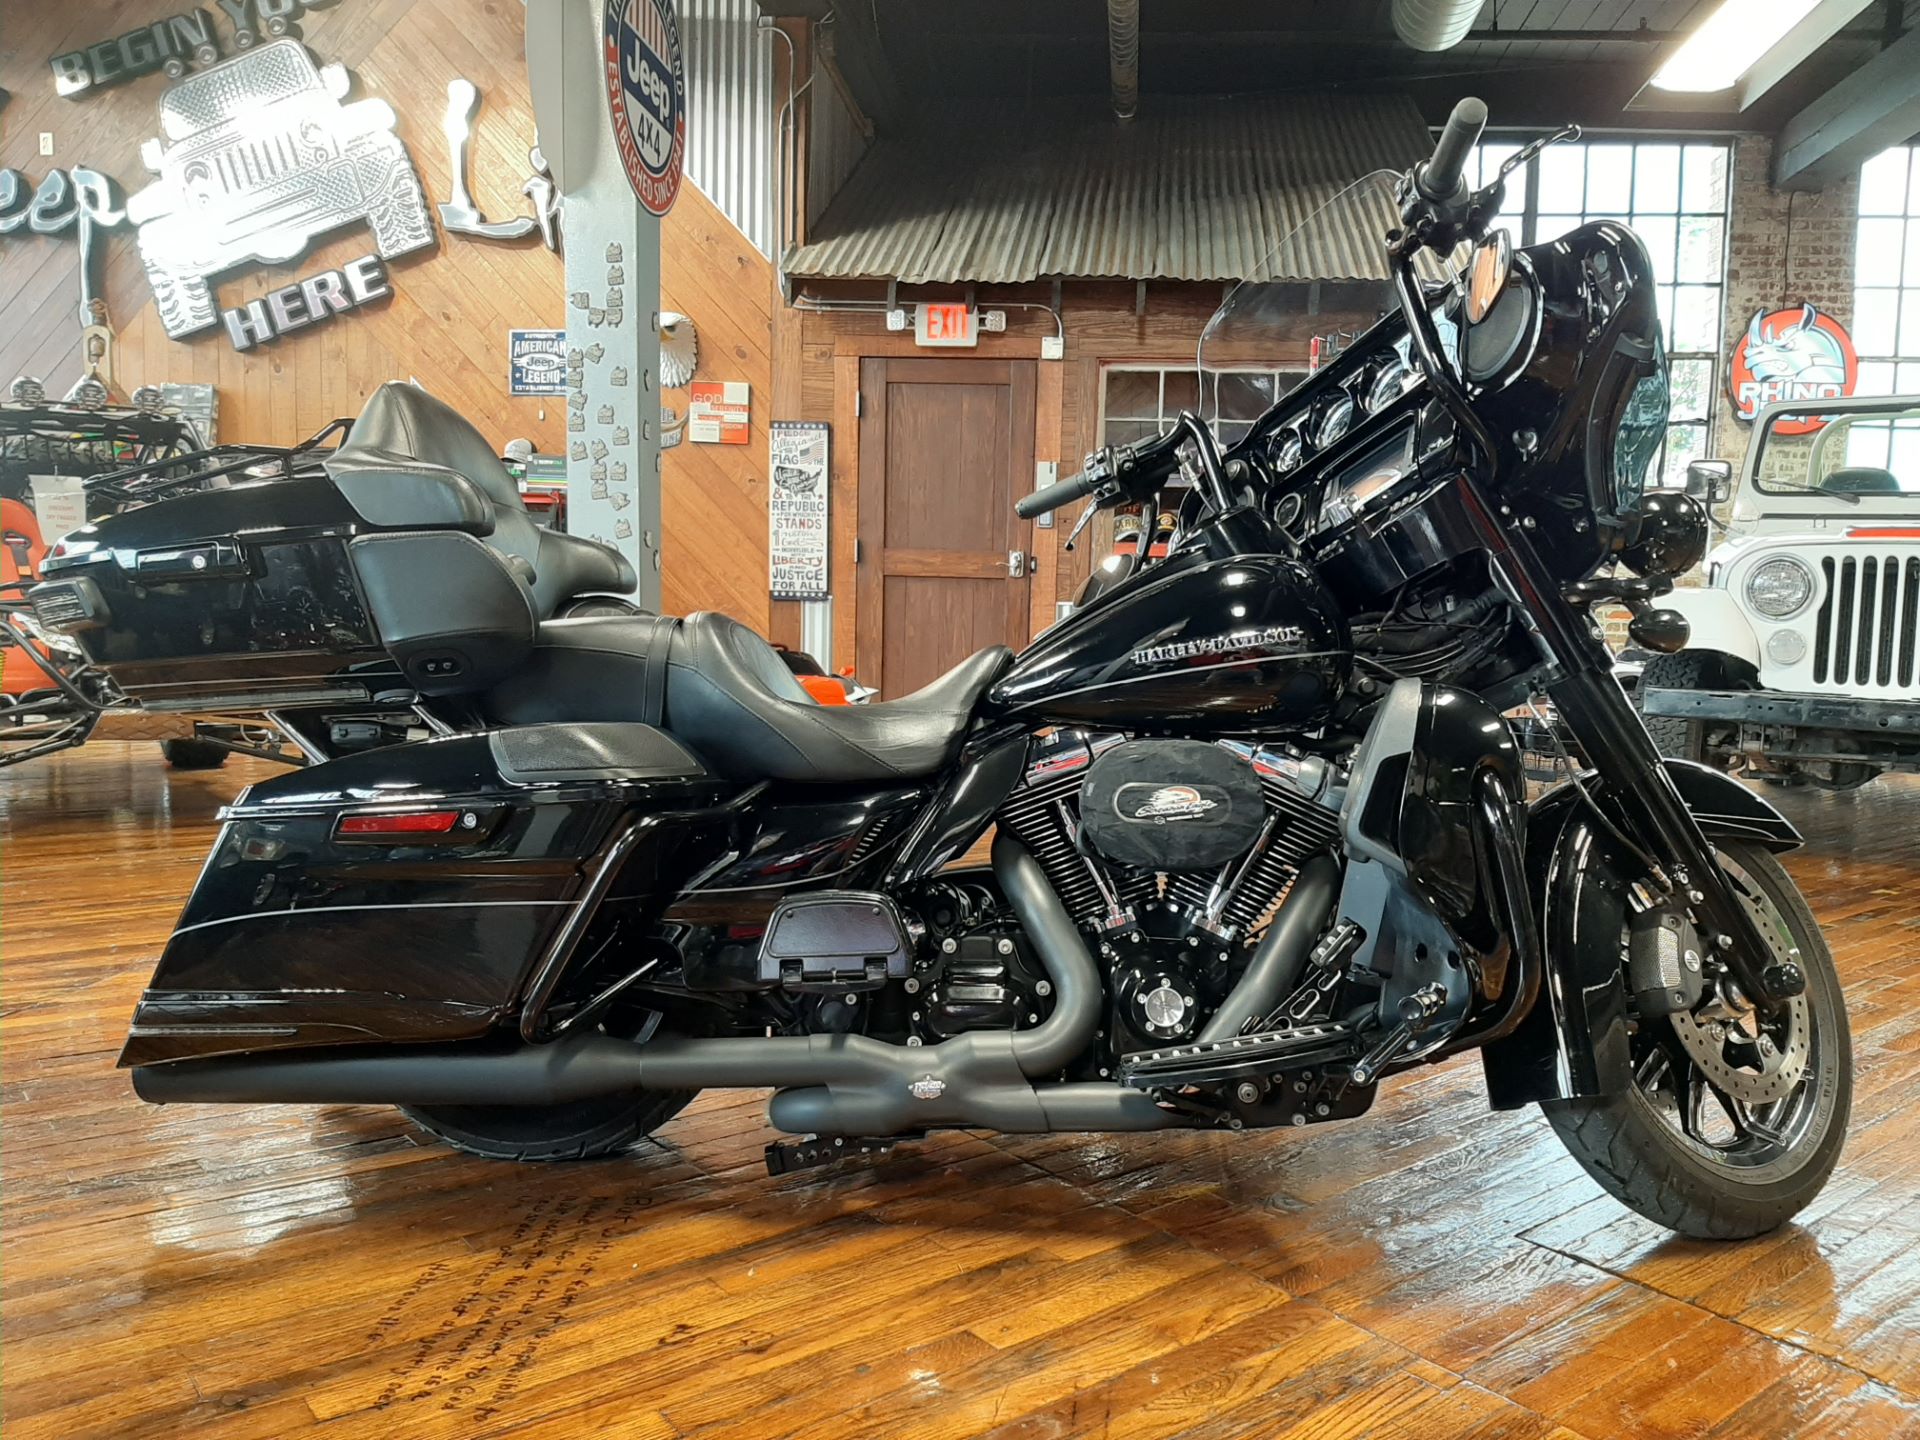 Used 2015 Harley Davidson Ultra Limited Motorcycles In Laurel Ms Ms Lul 0808 2673 Vivid Black